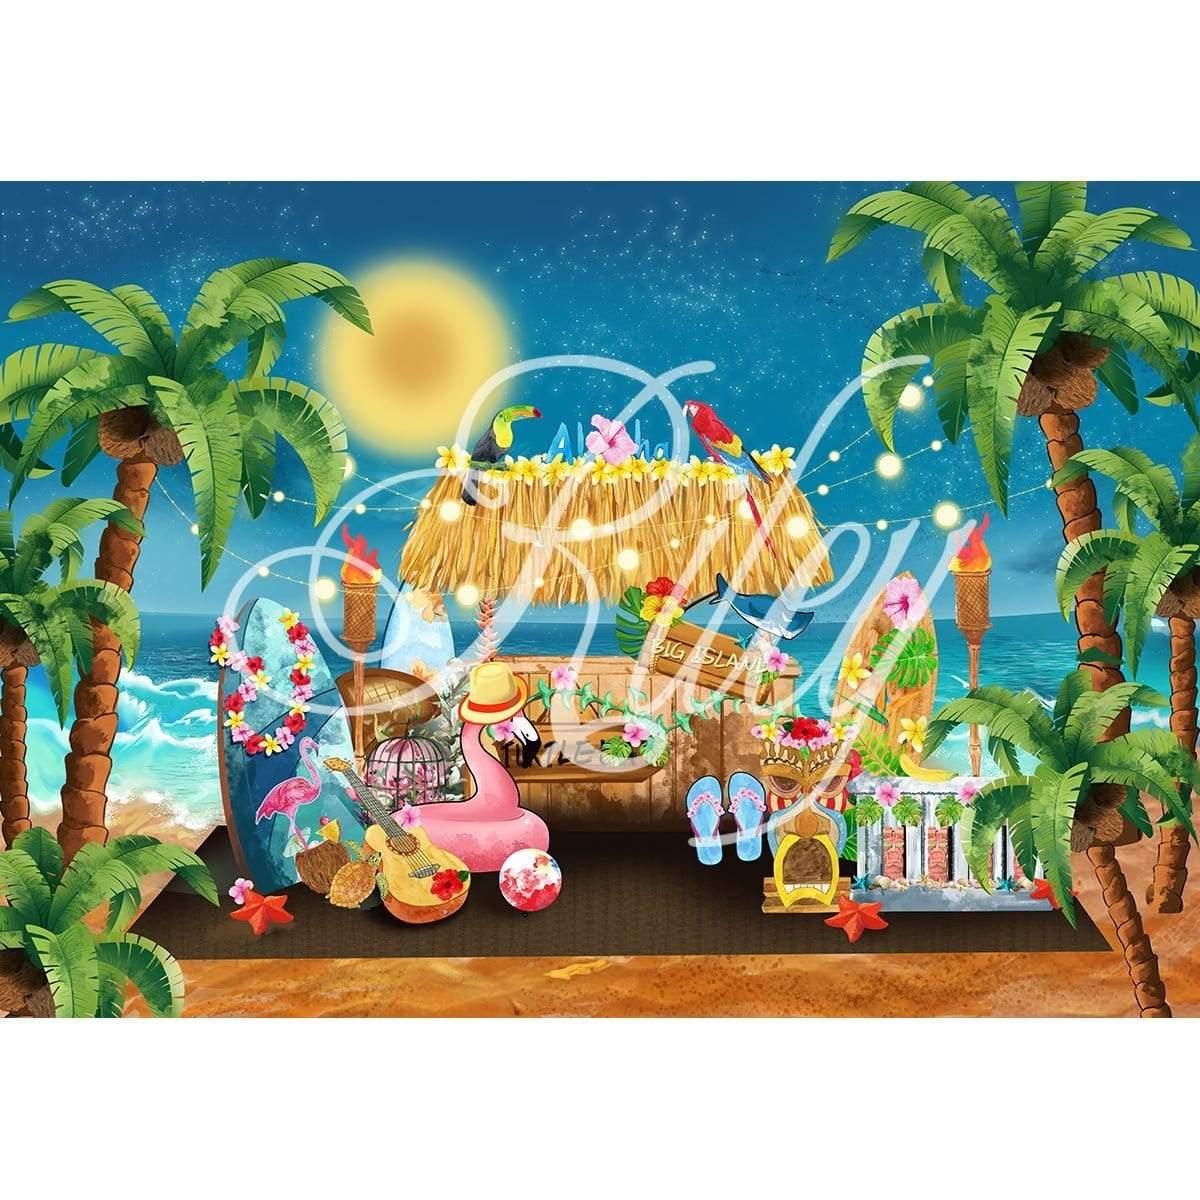 Allenjoy Aloha Luna Party Hawaiian Backdrop Flamingo Coconut Tree Surfboard Decor - Allenjoystudio